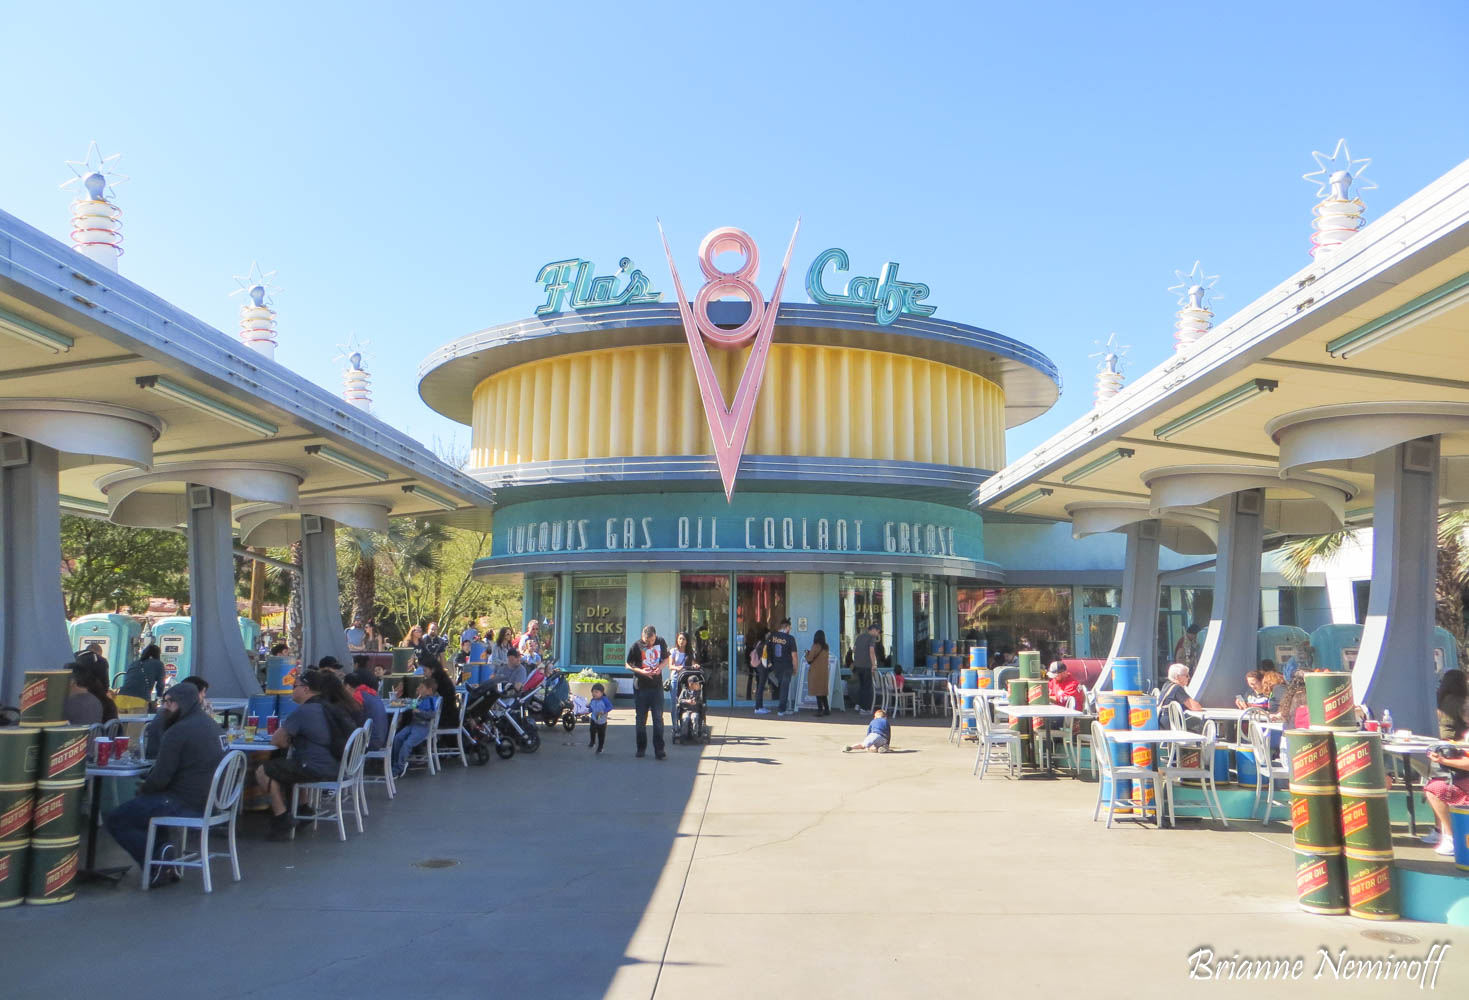 Flo's V8 Cafe at Disney California Adventure